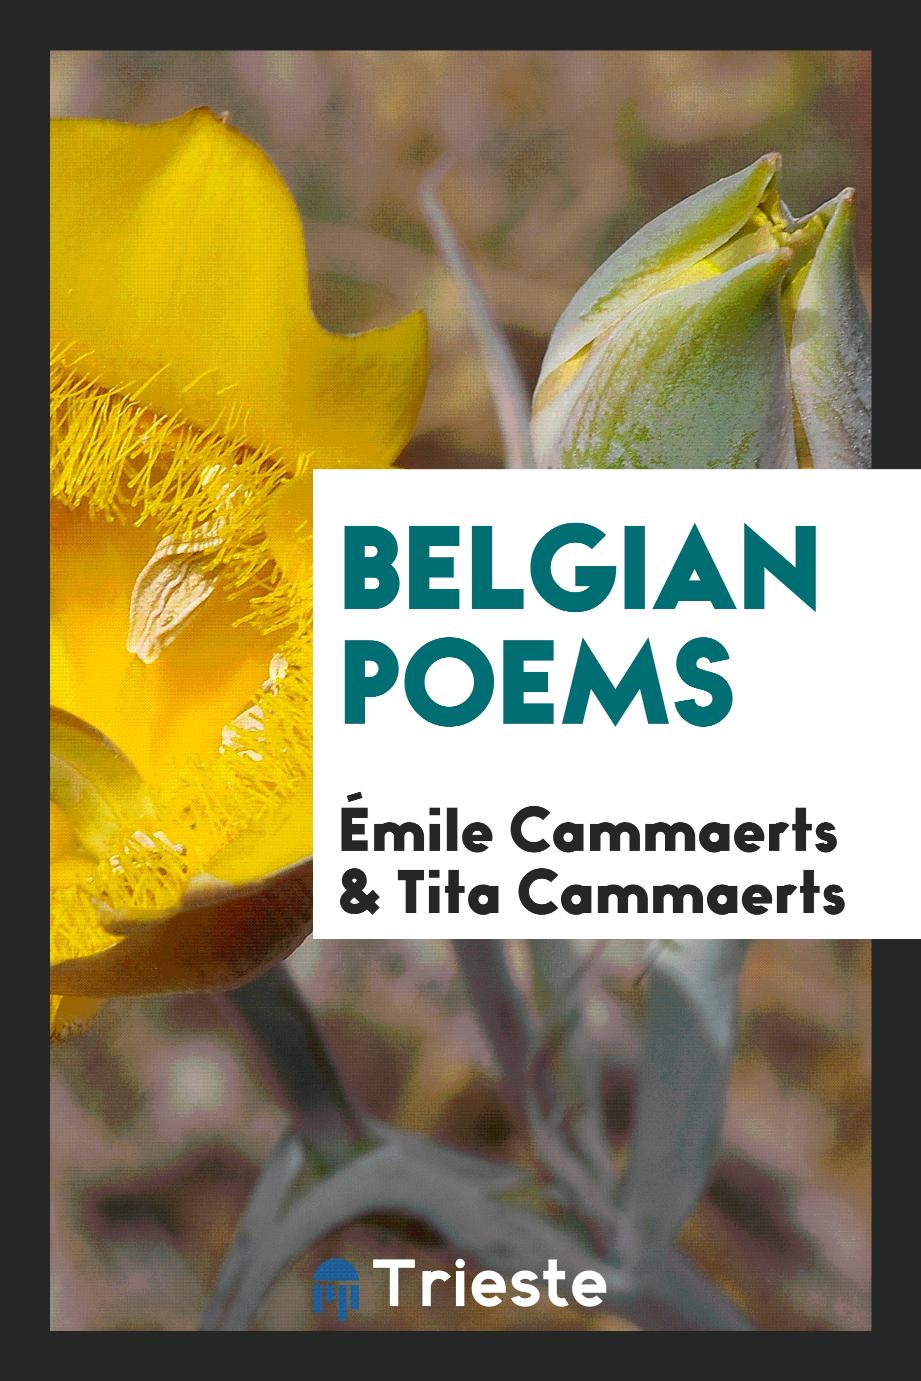 Belgian poems